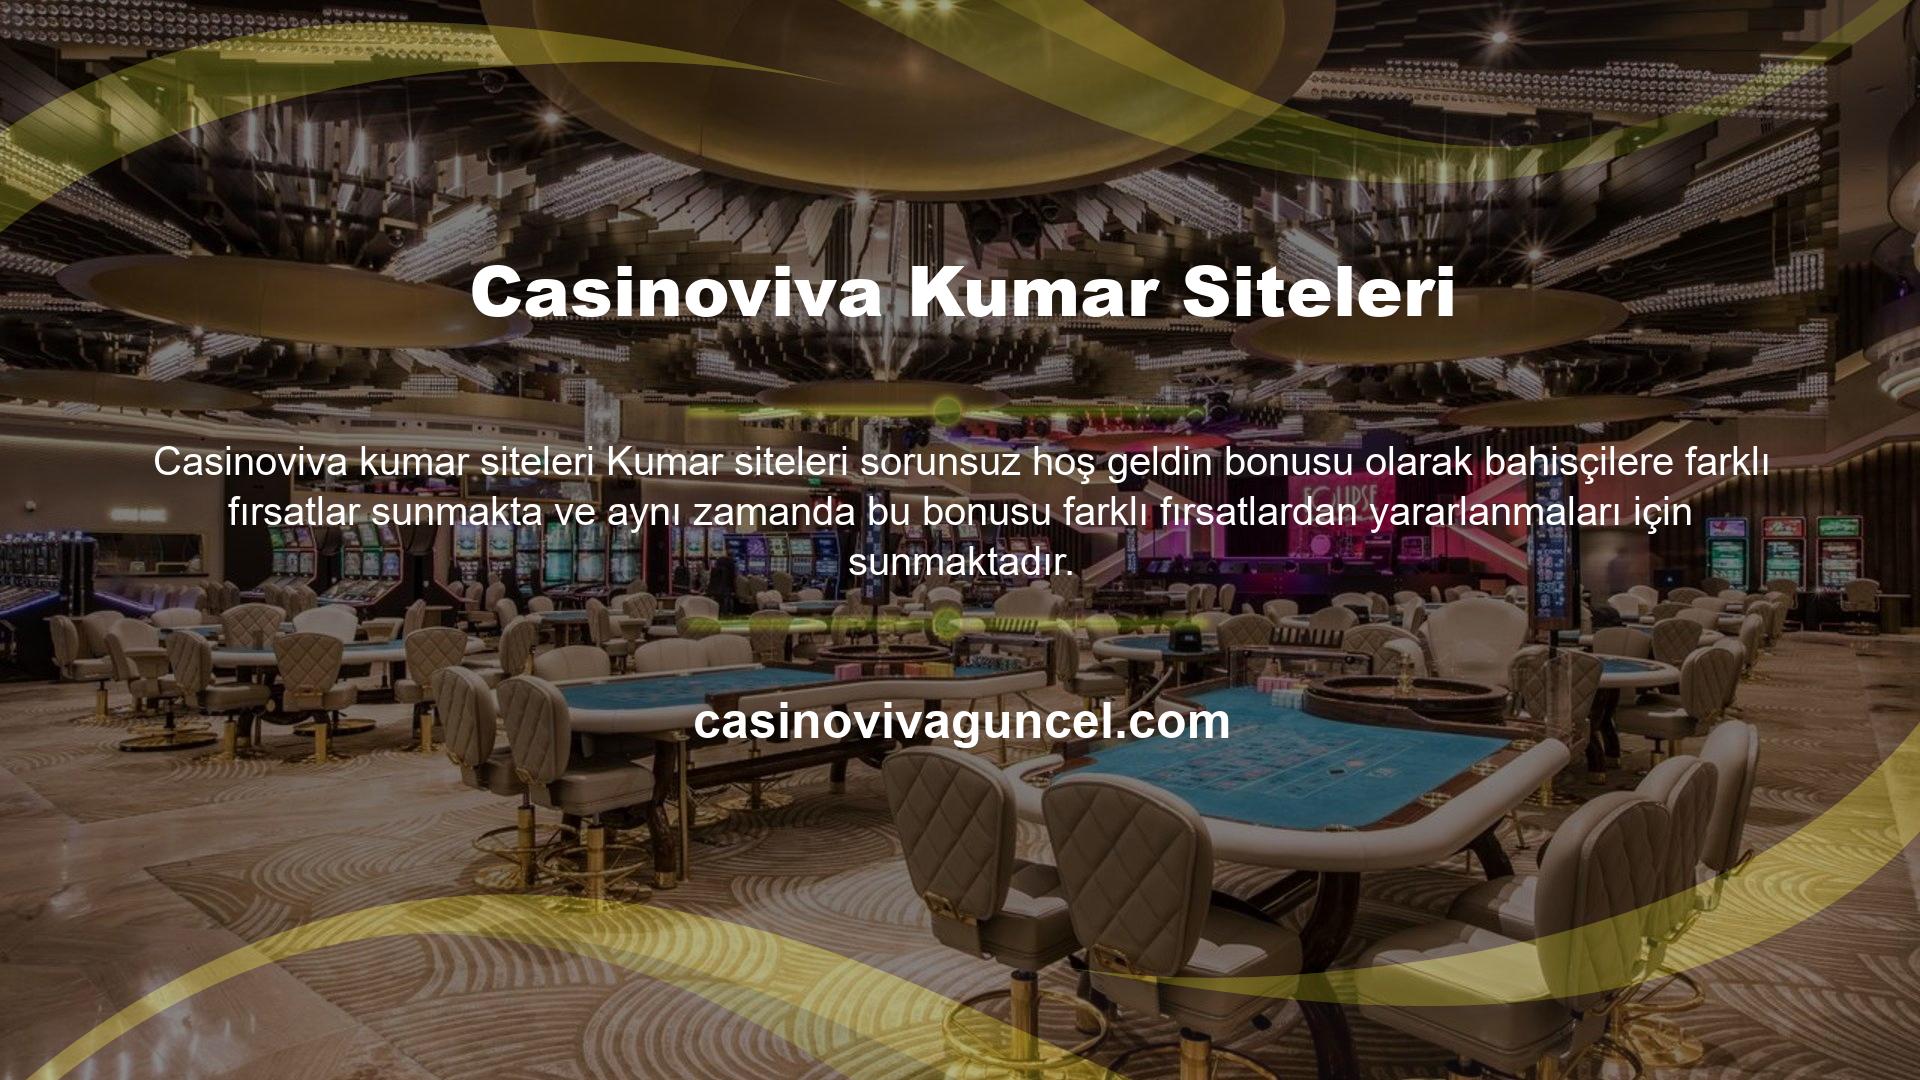 Casinoviva Kumar Siteleri